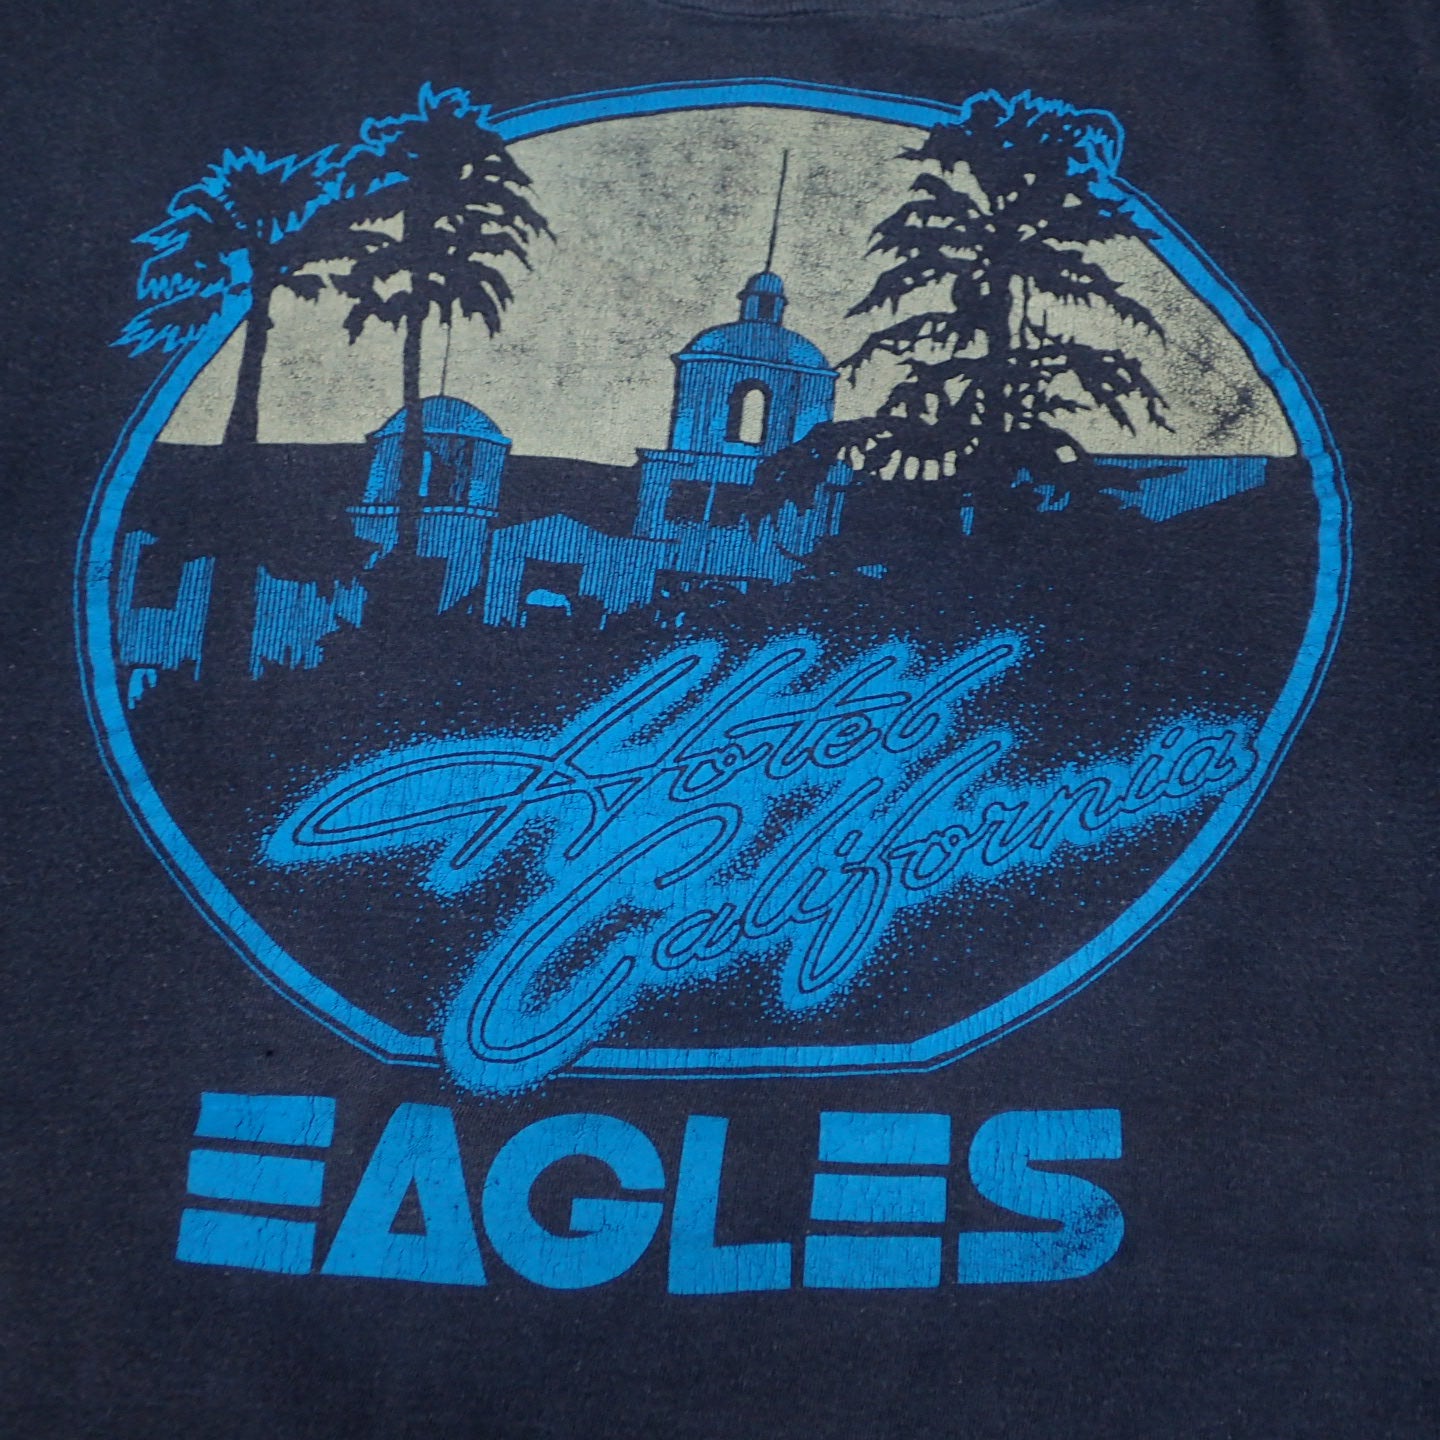 70s The Eagles " Hotel California Tee"